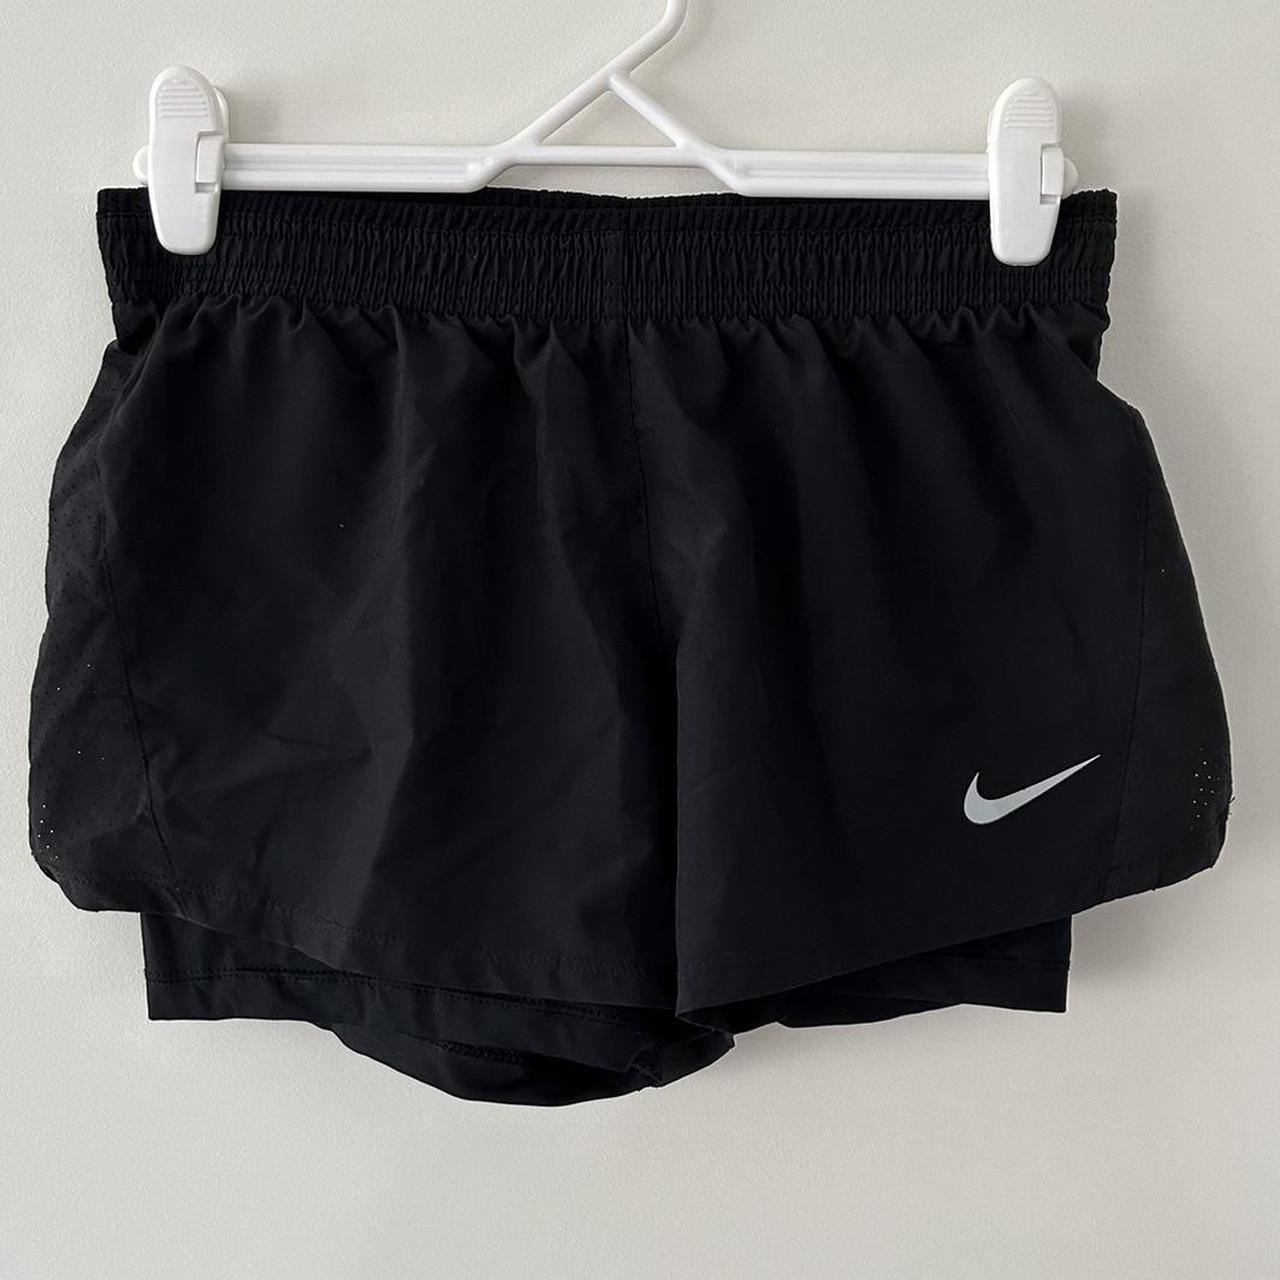 Nike Two Layer Black Shorts. No pockets, inside... - Depop